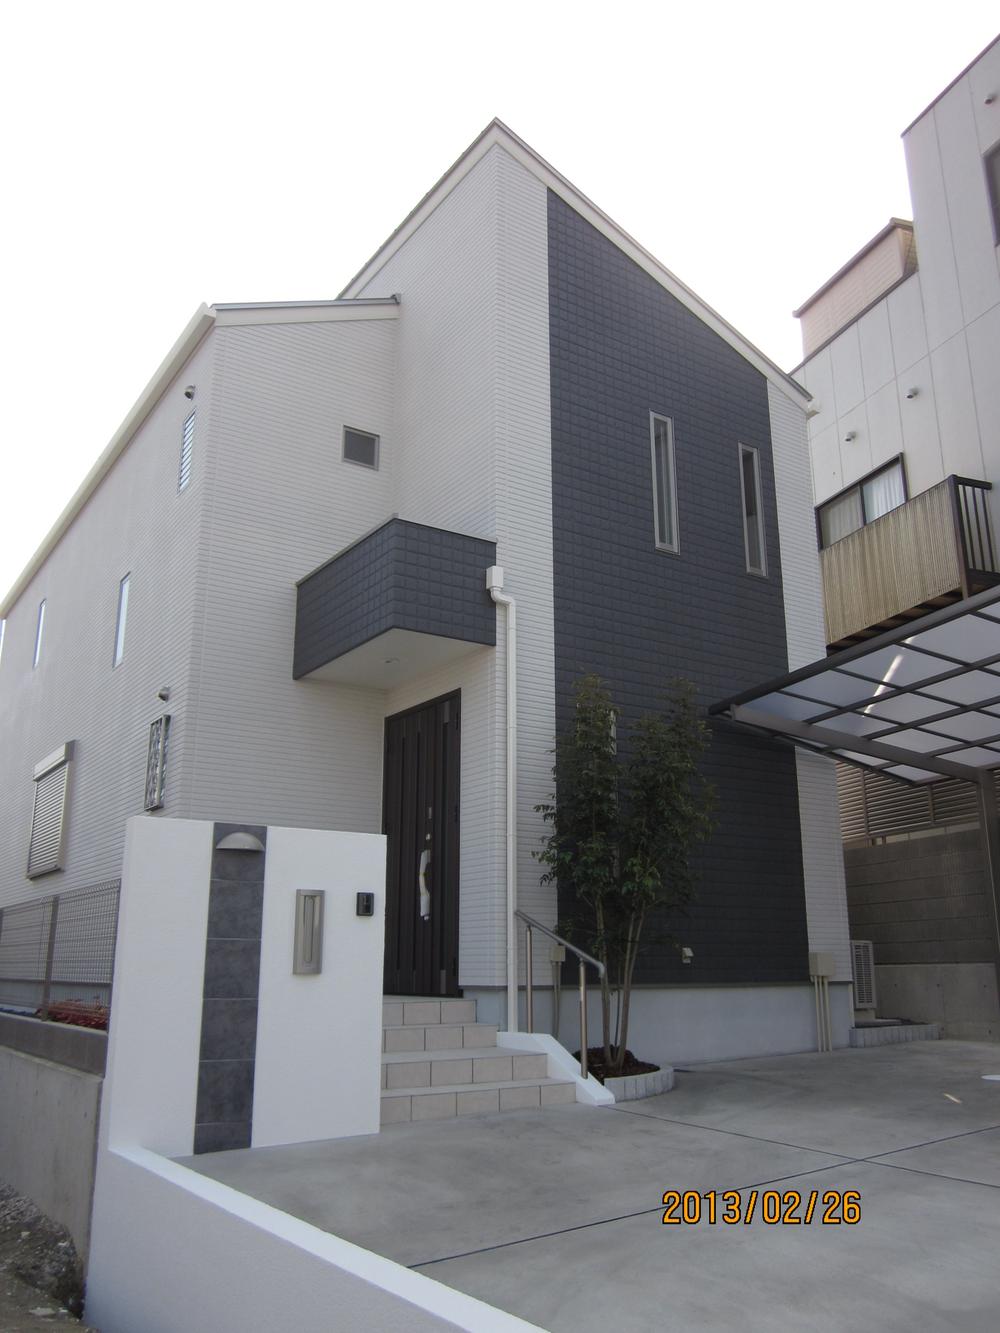 Building plan example (exterior photos). Building plan example Building price 16.8 million yen, Building area 100 sq m